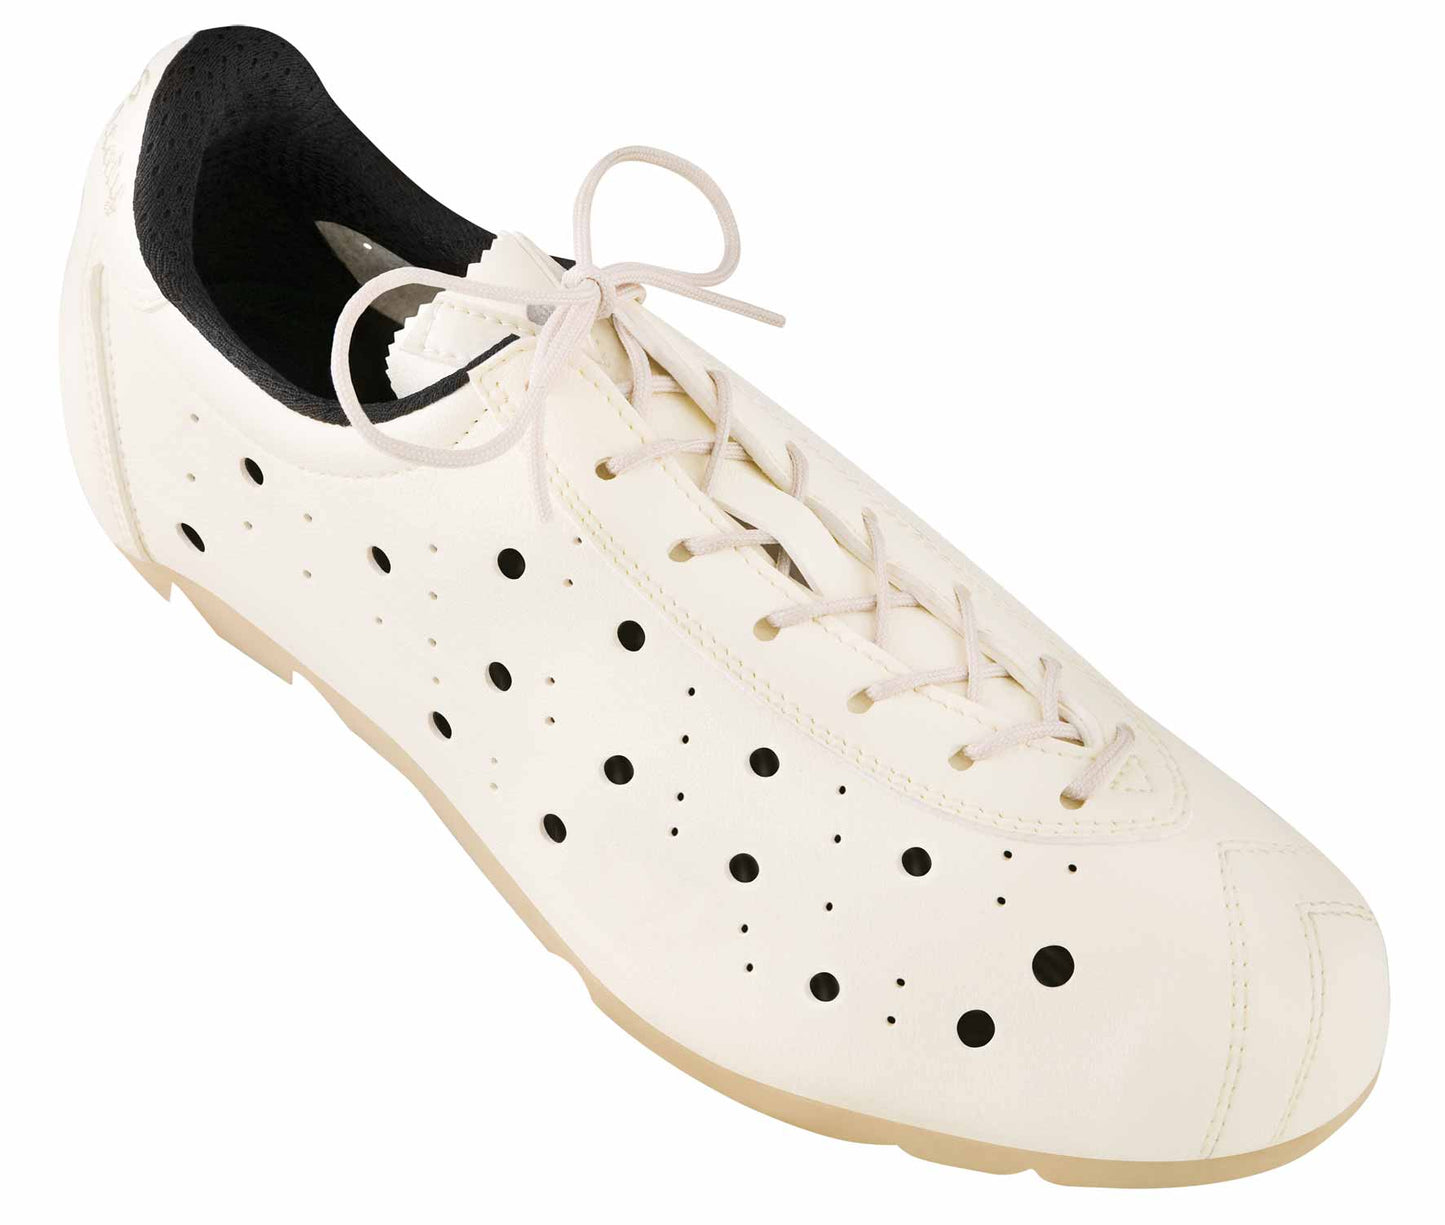 Vittoria 1976 BIANCO LINE Cycling Shoes - Cream